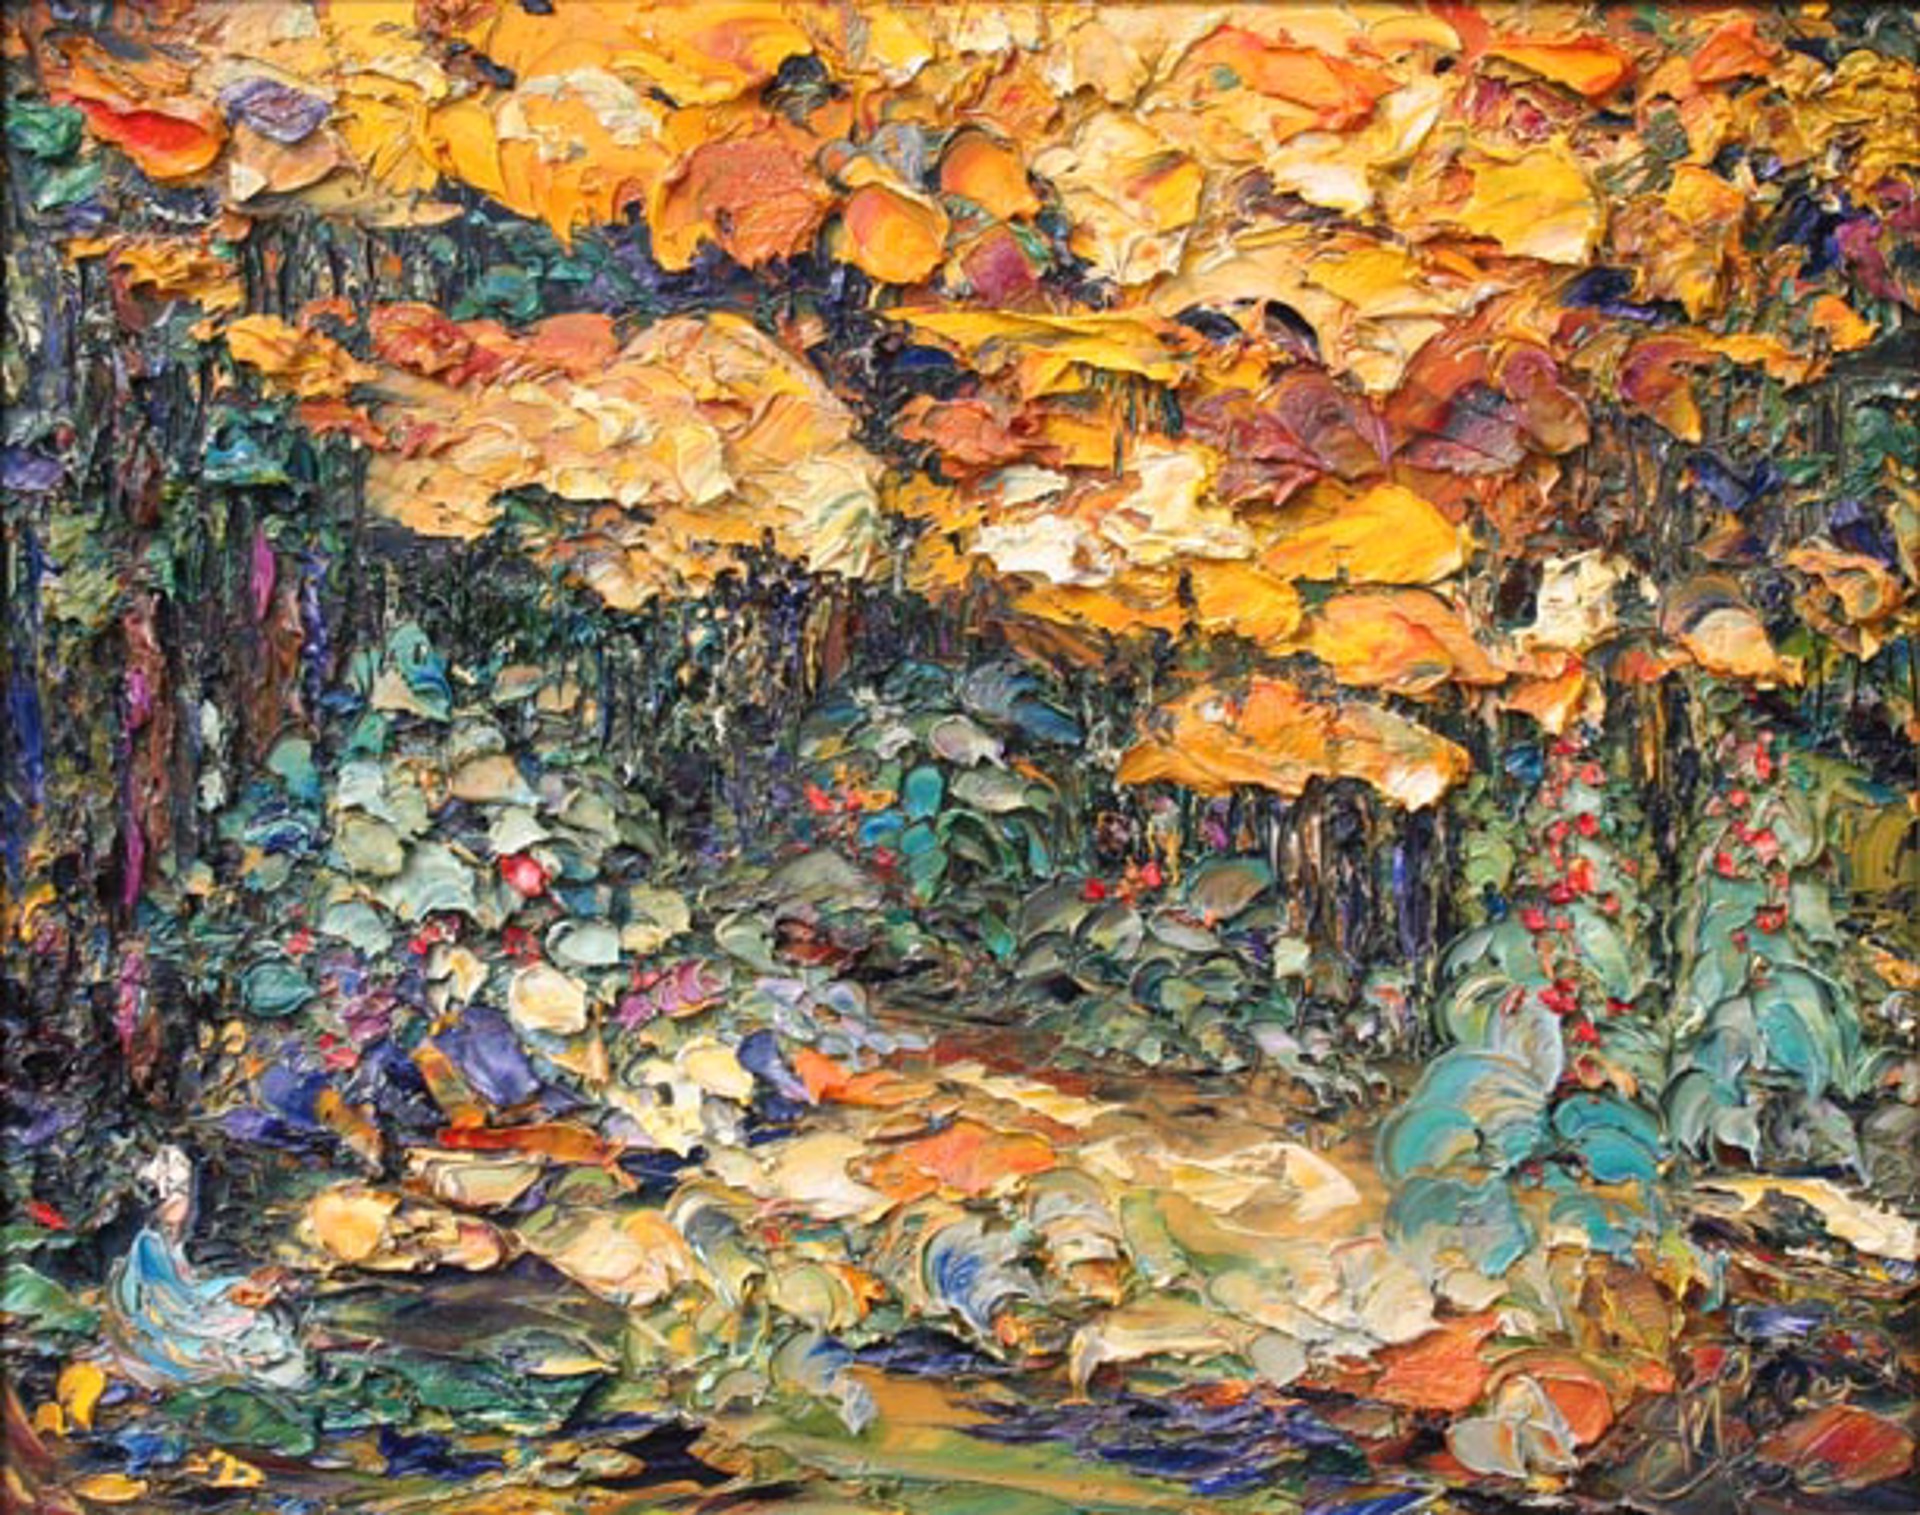 Golden Forest (After Monet) by JD Miller